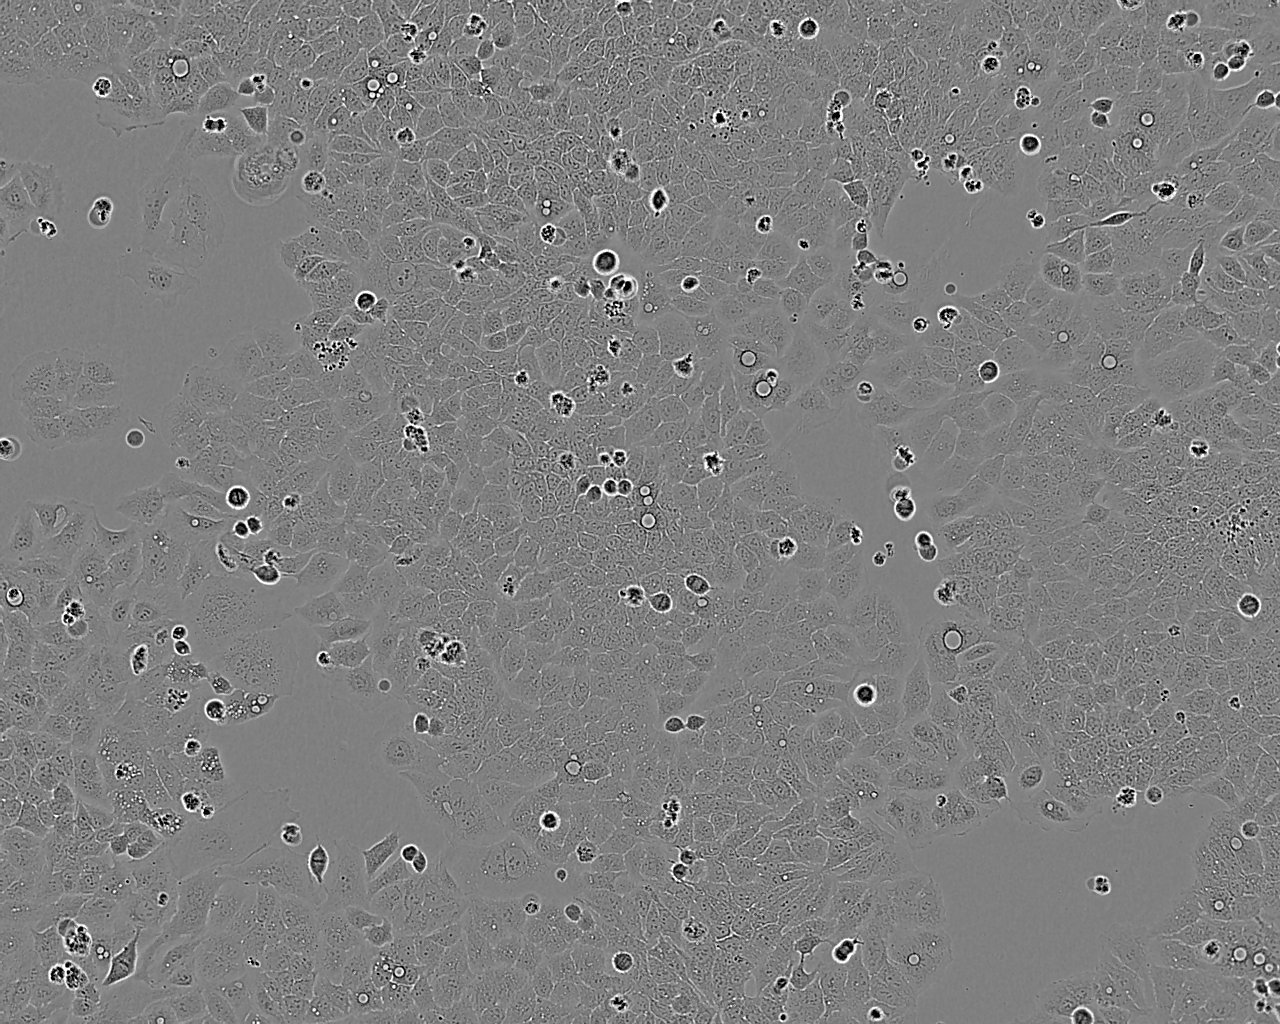 V79 epithelioid cells仓鼠肺细胞系